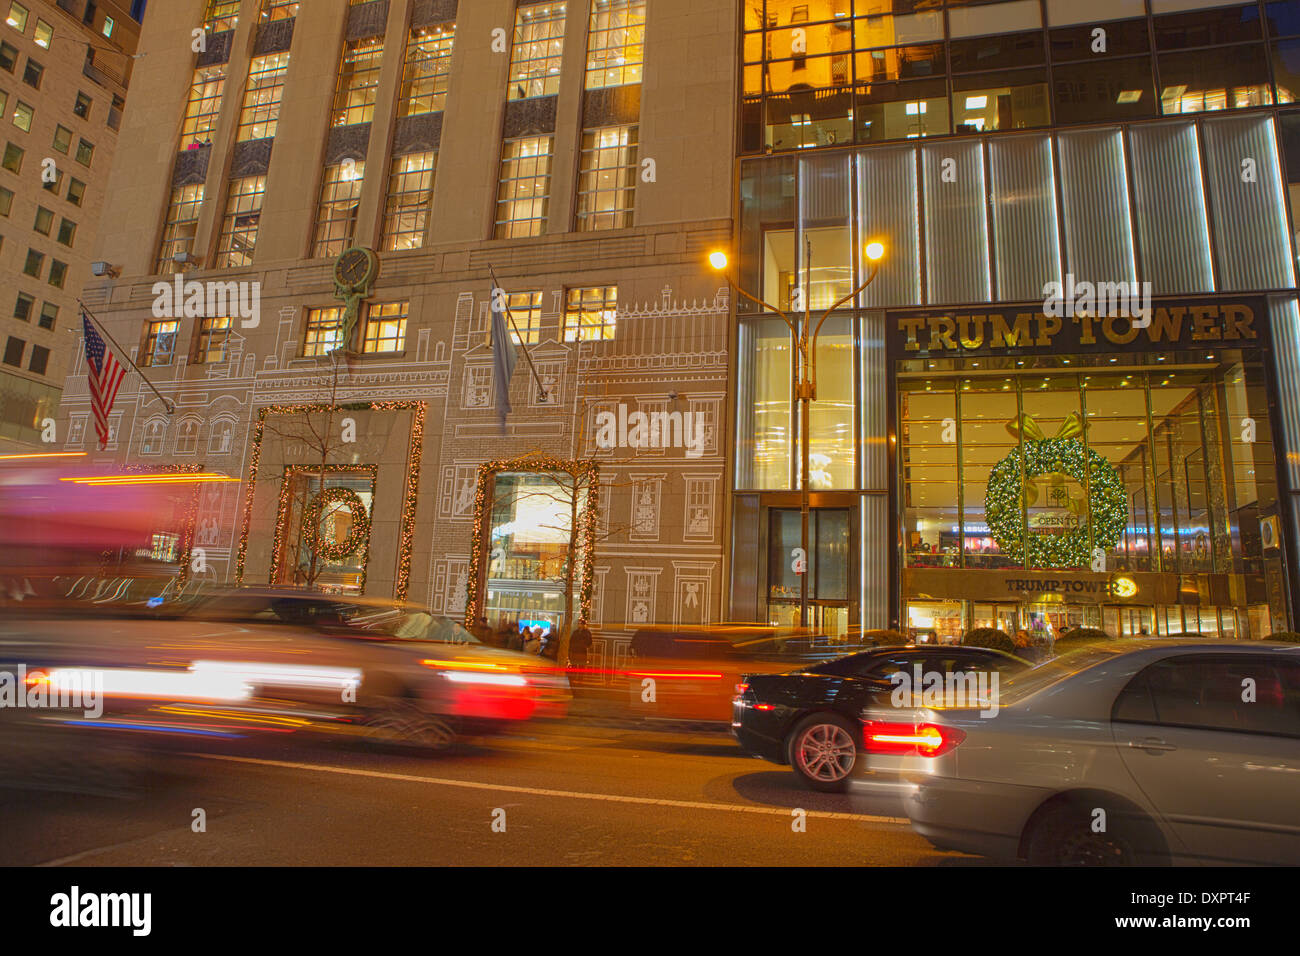 The Tiffany & Co., and Trump Tower on Fifth Avenue with holiday decoration, New York City, NY, USA Stock Photo